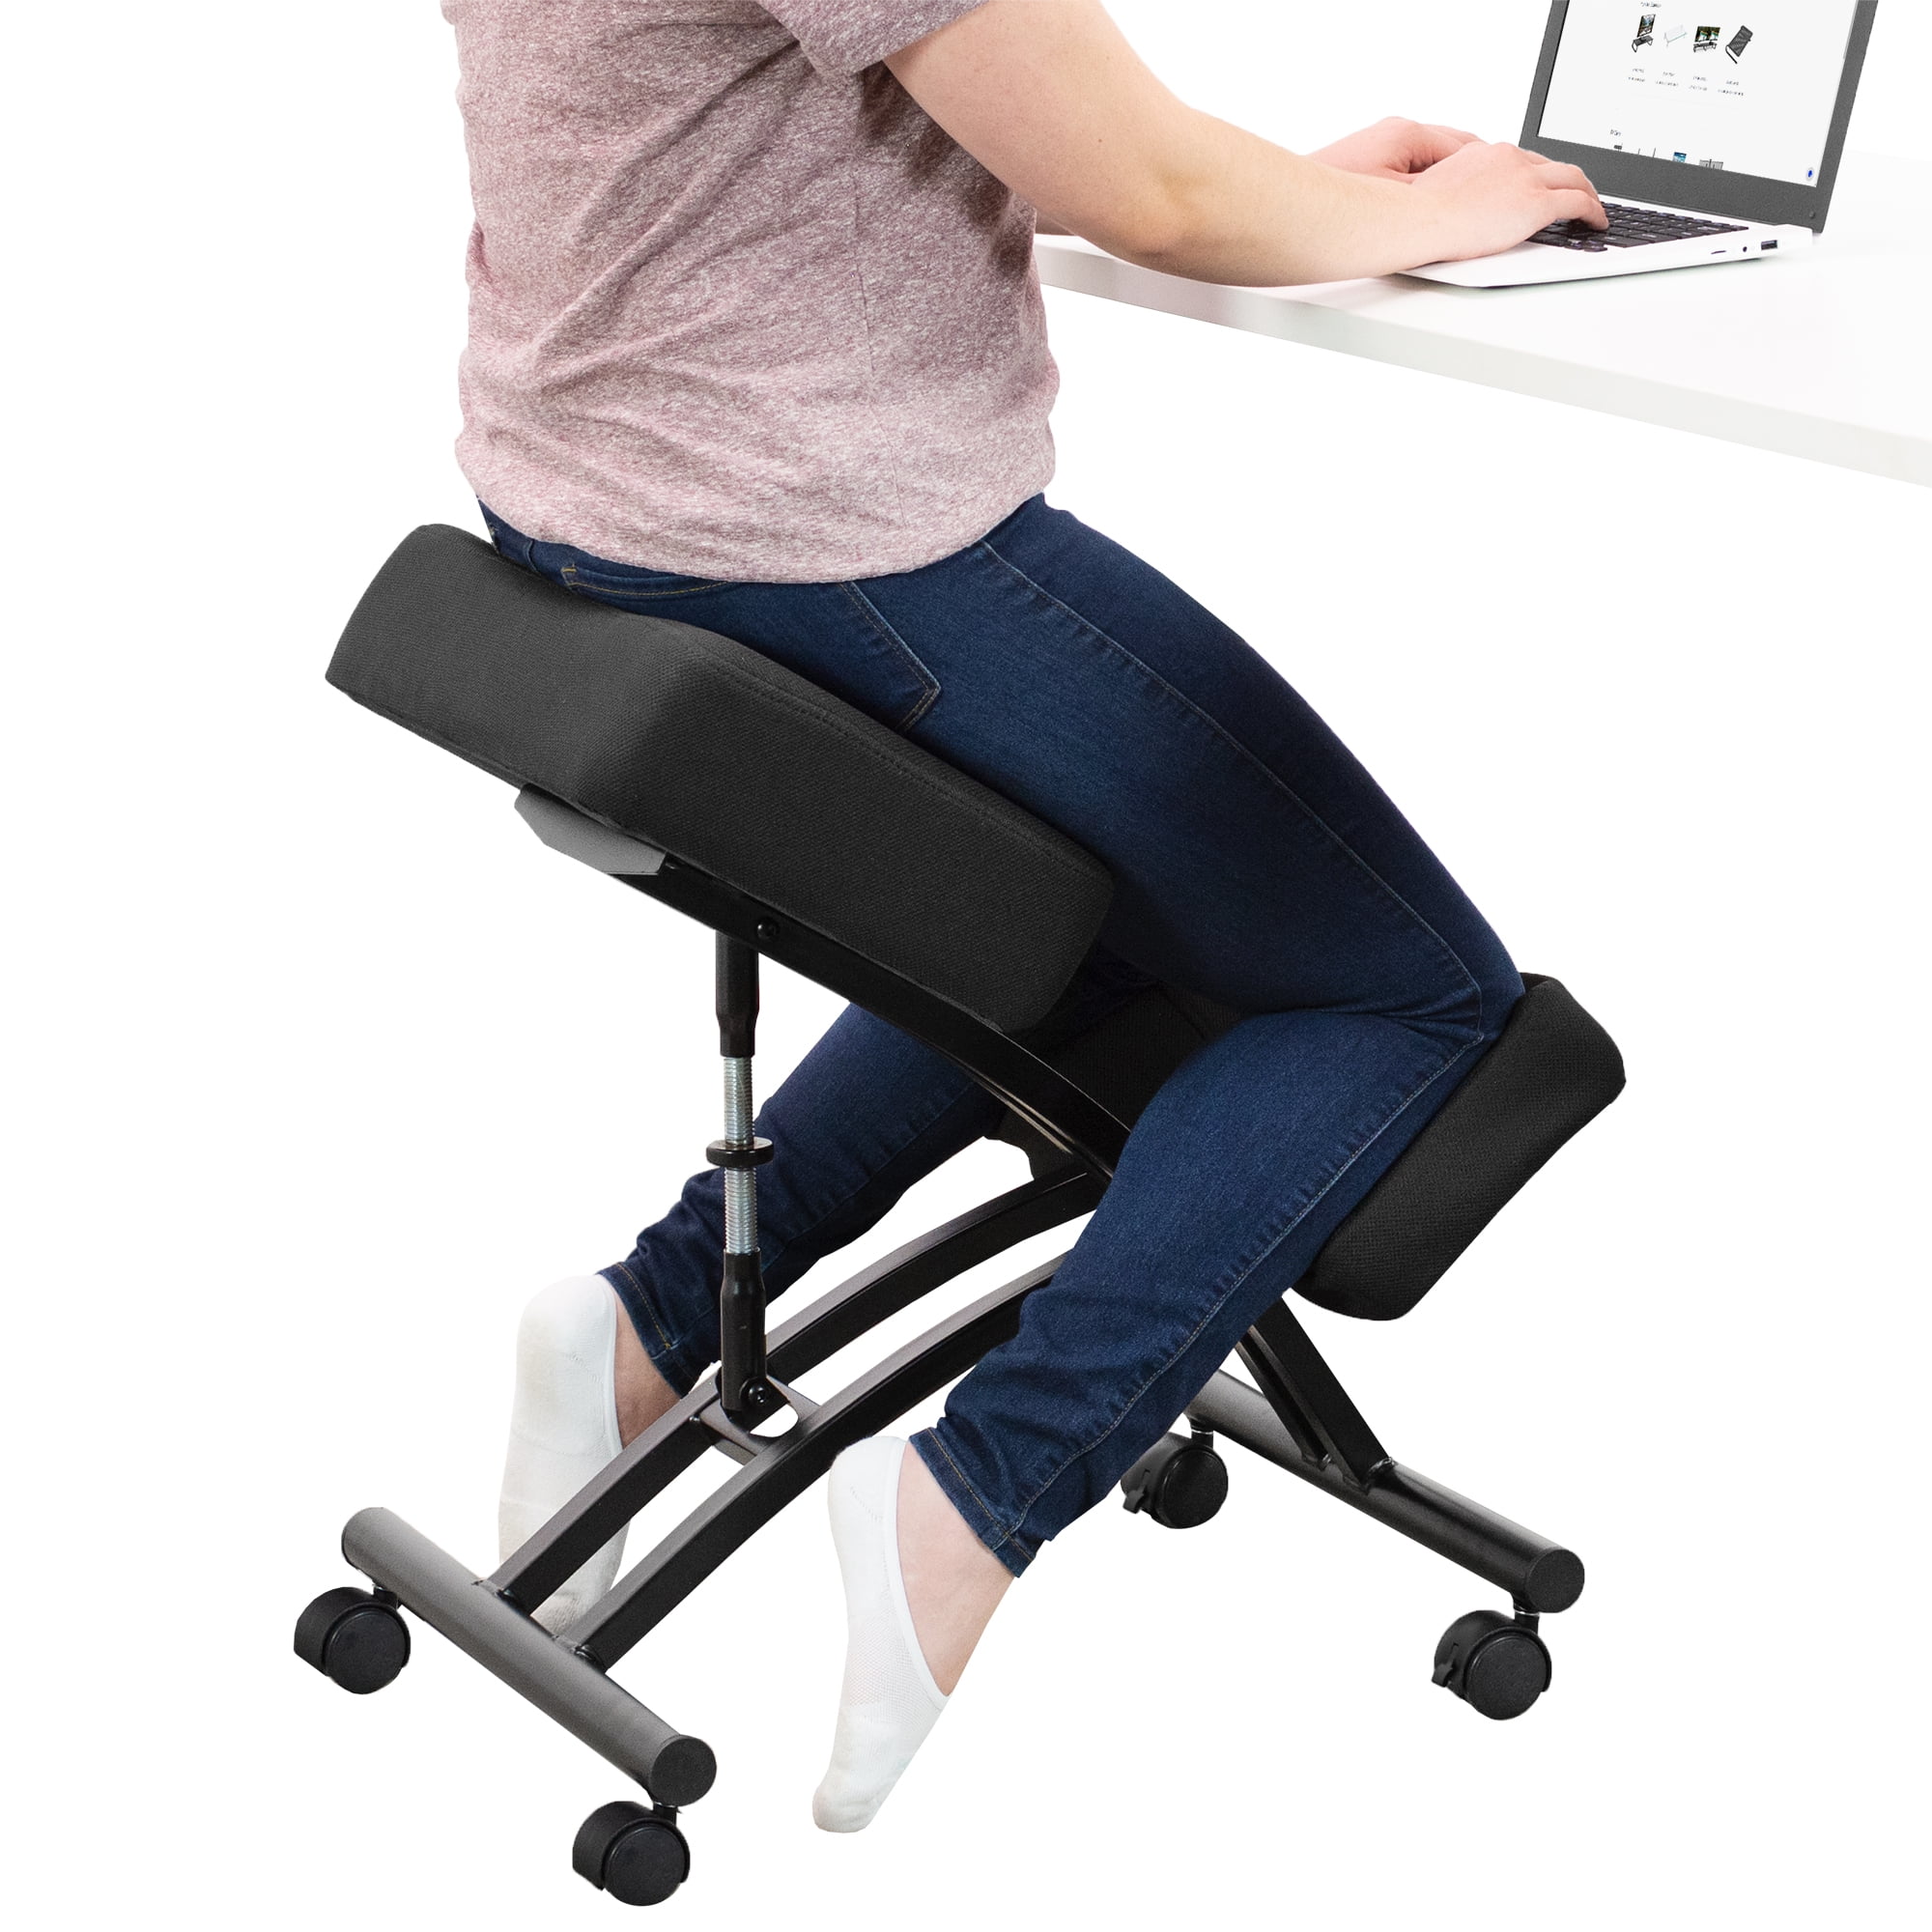 Pro 11 wellbeing Ergonomic Kneeling chair Grey Study Office Posture 